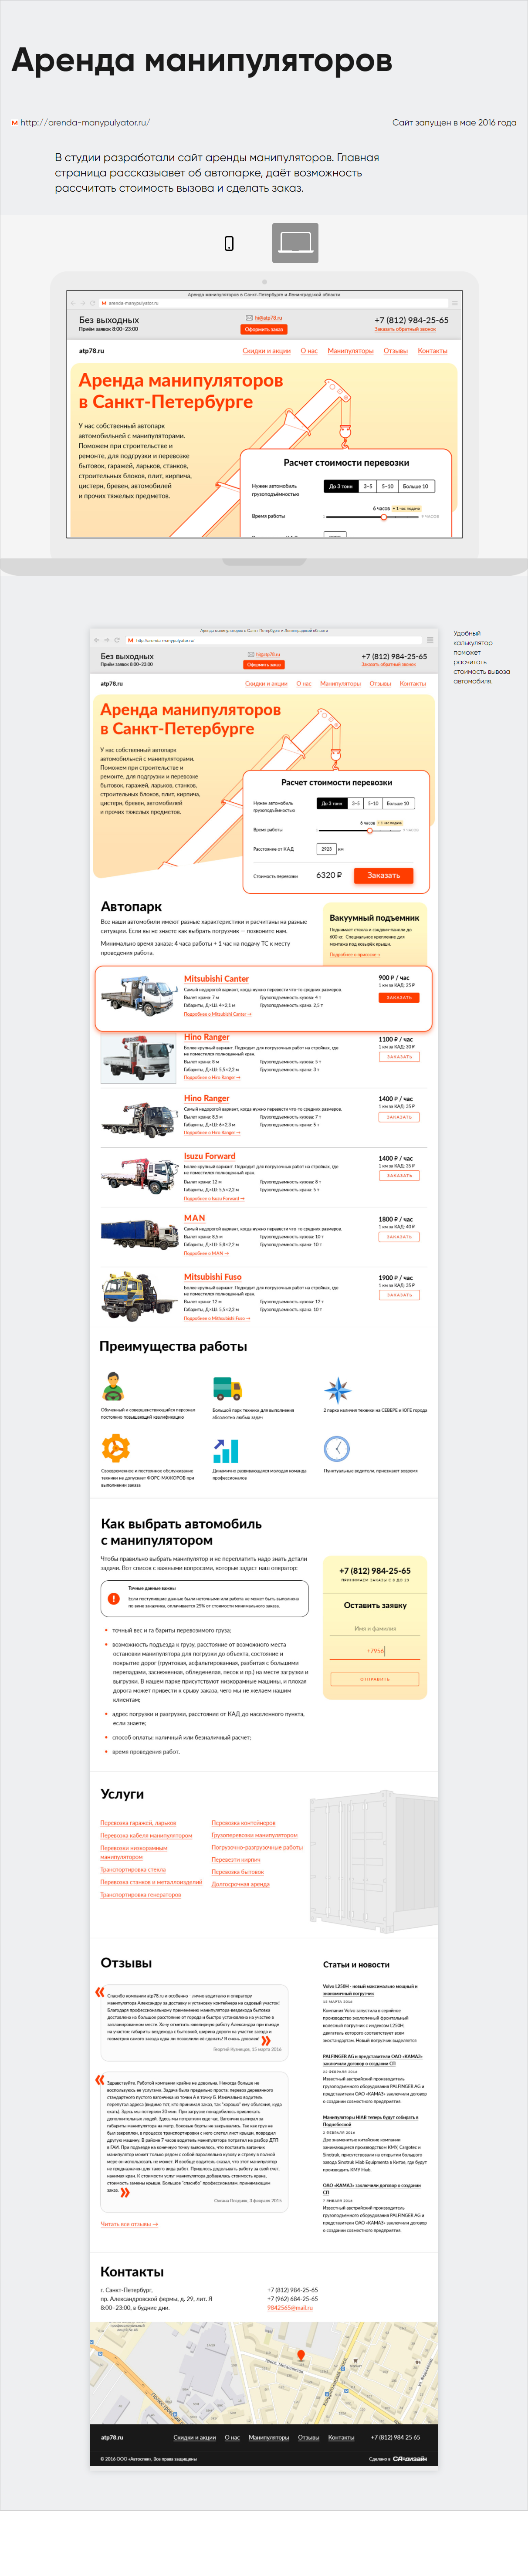 Website development for the company Arenda manipulyatorov